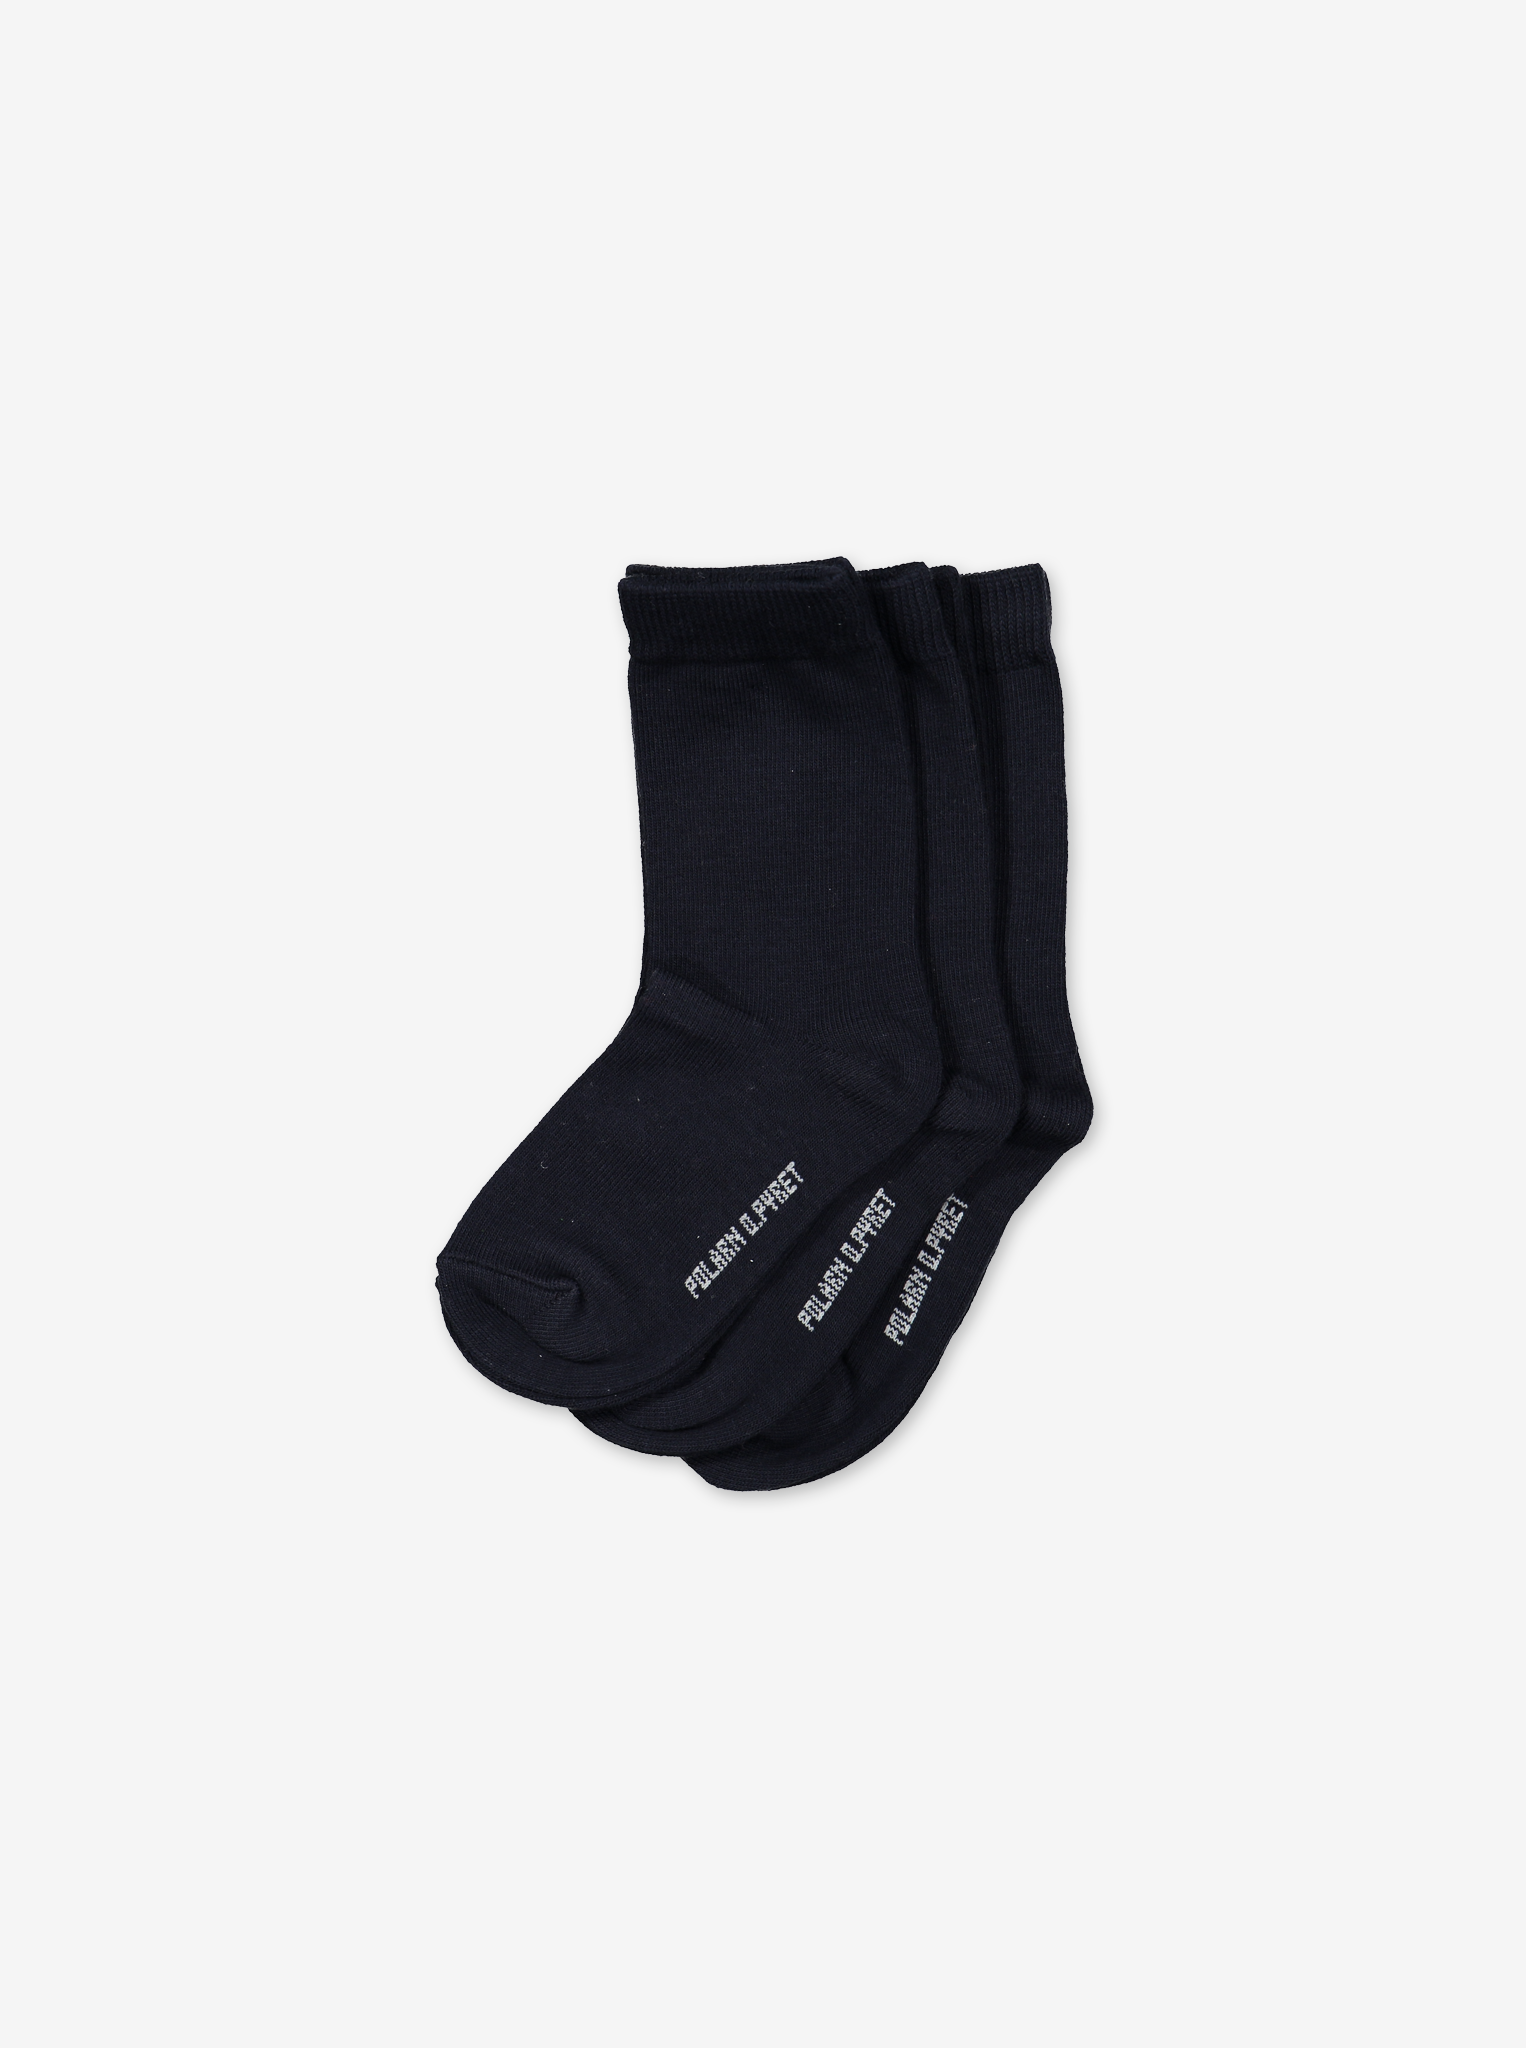 3 Pack Kids Socks Black Unisex 2-12y | Polarn O. Pyret UK